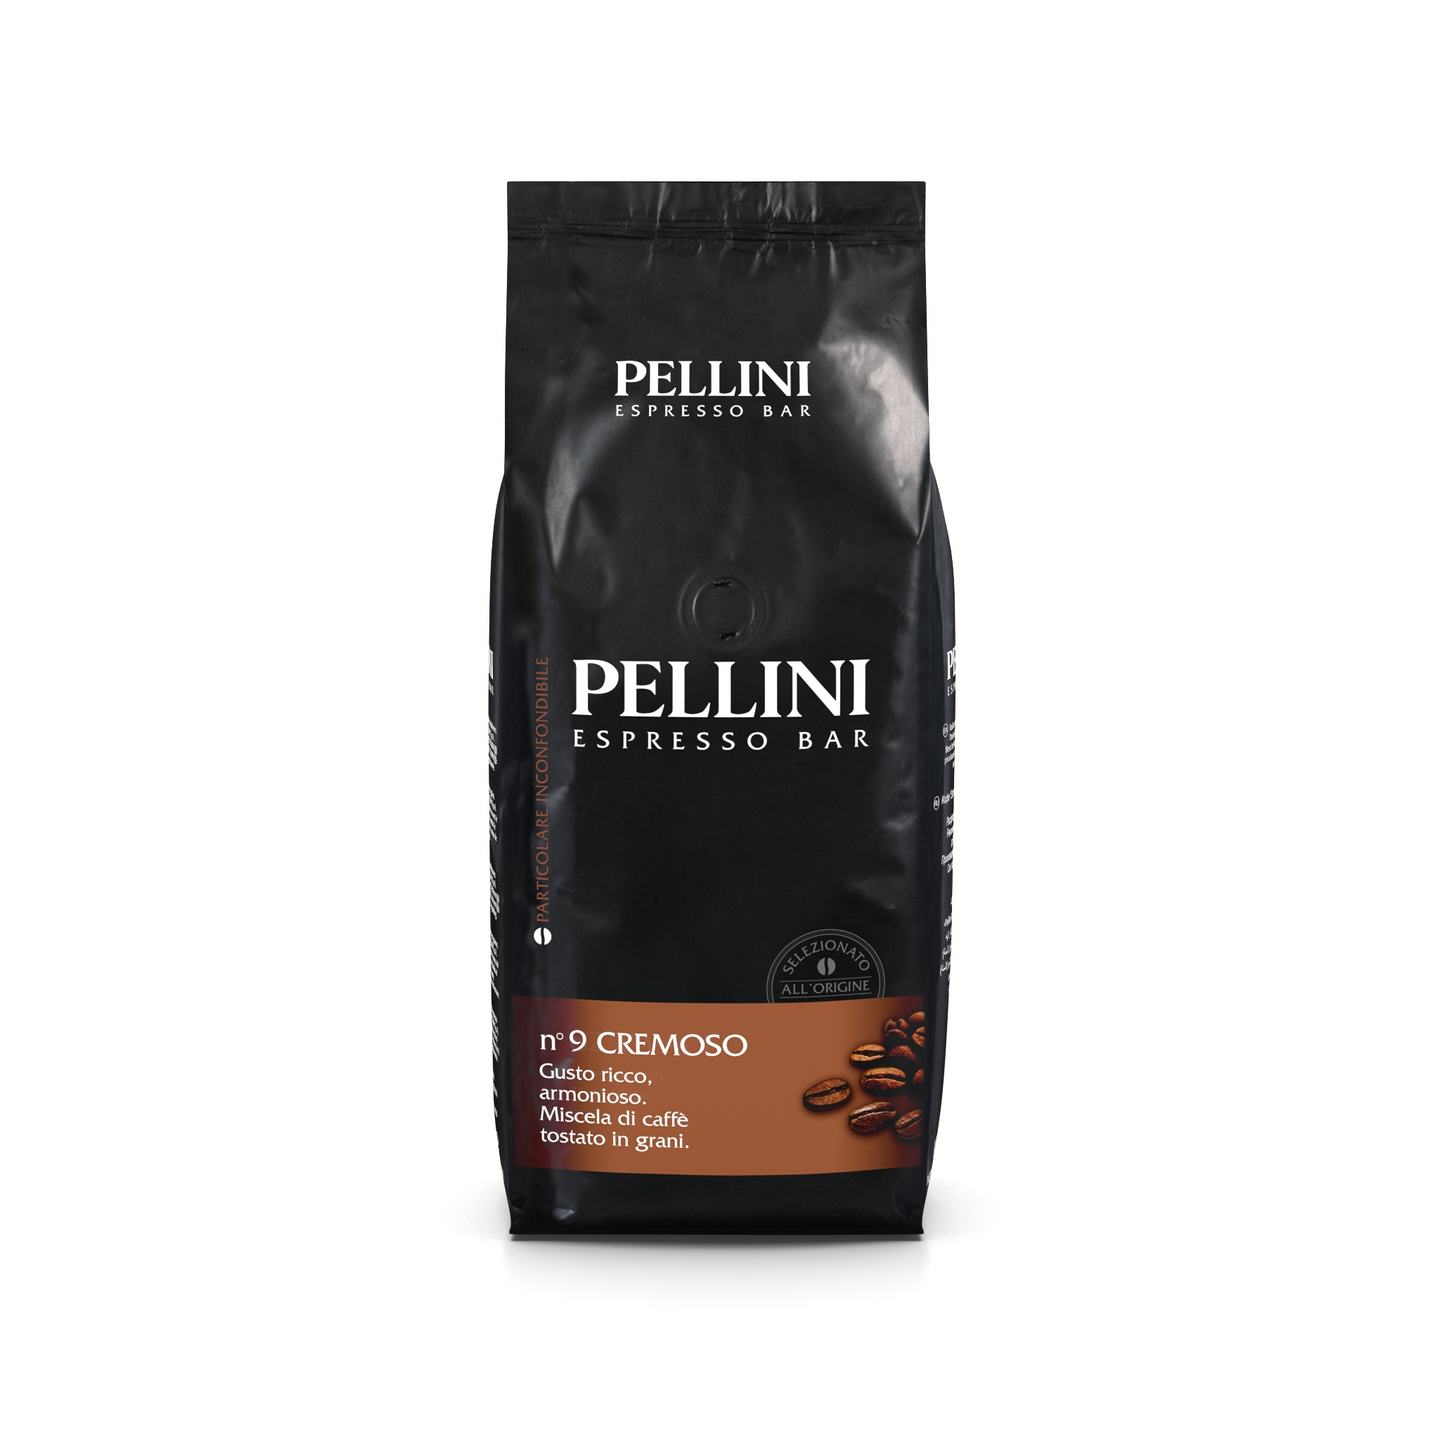 Pellini Cremoso espressopapu 1kg